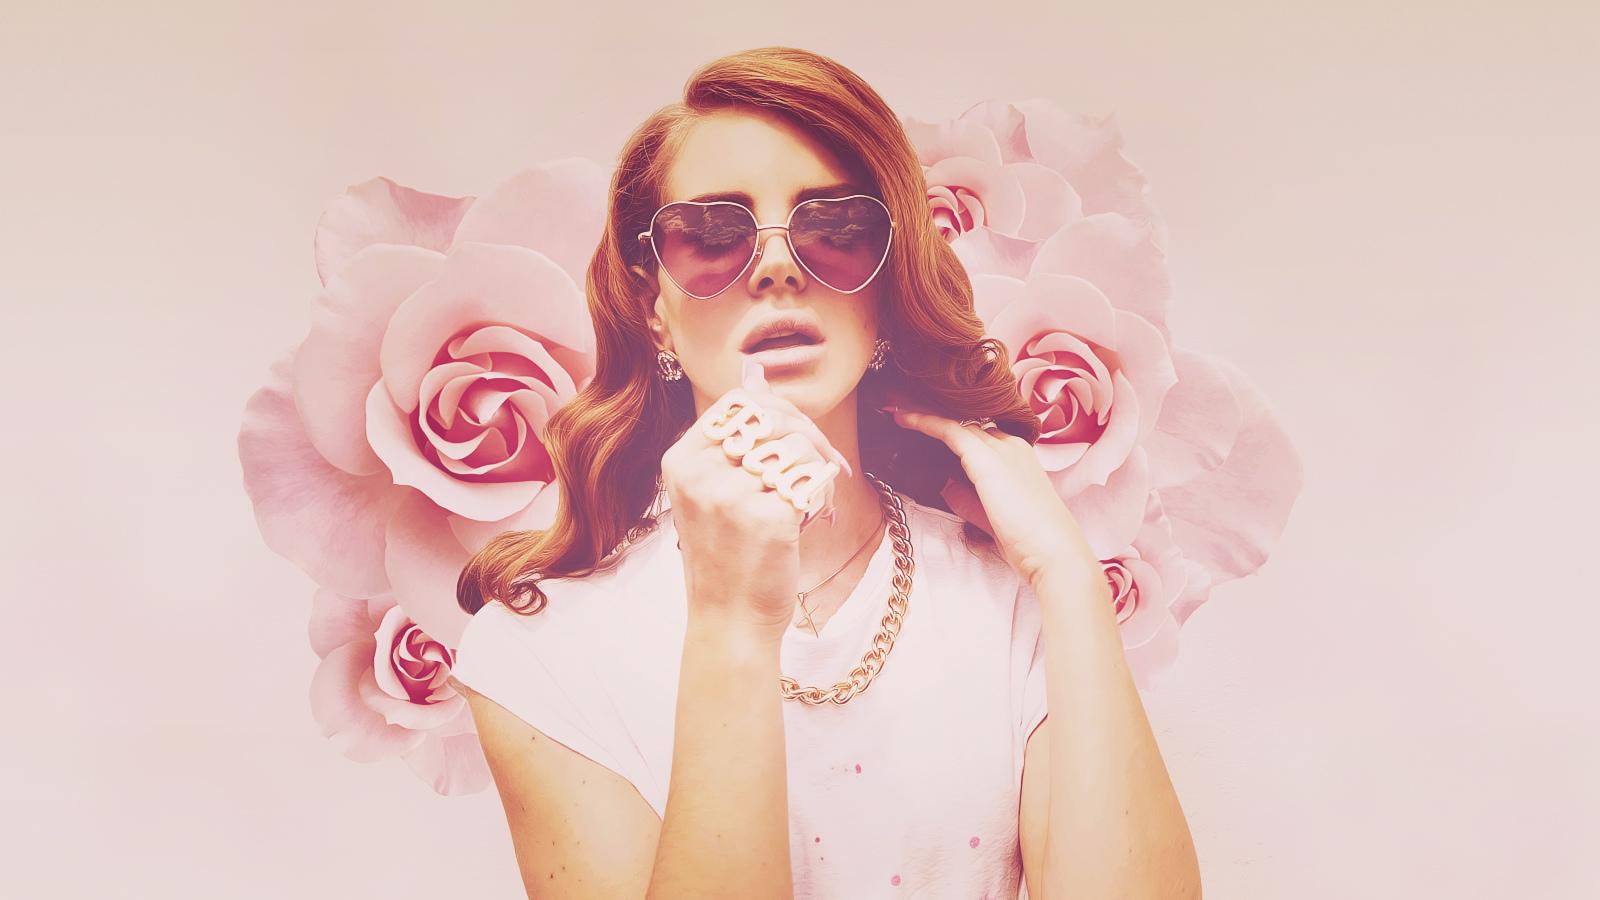 Lana Del Rey Wallpaper Hd Download